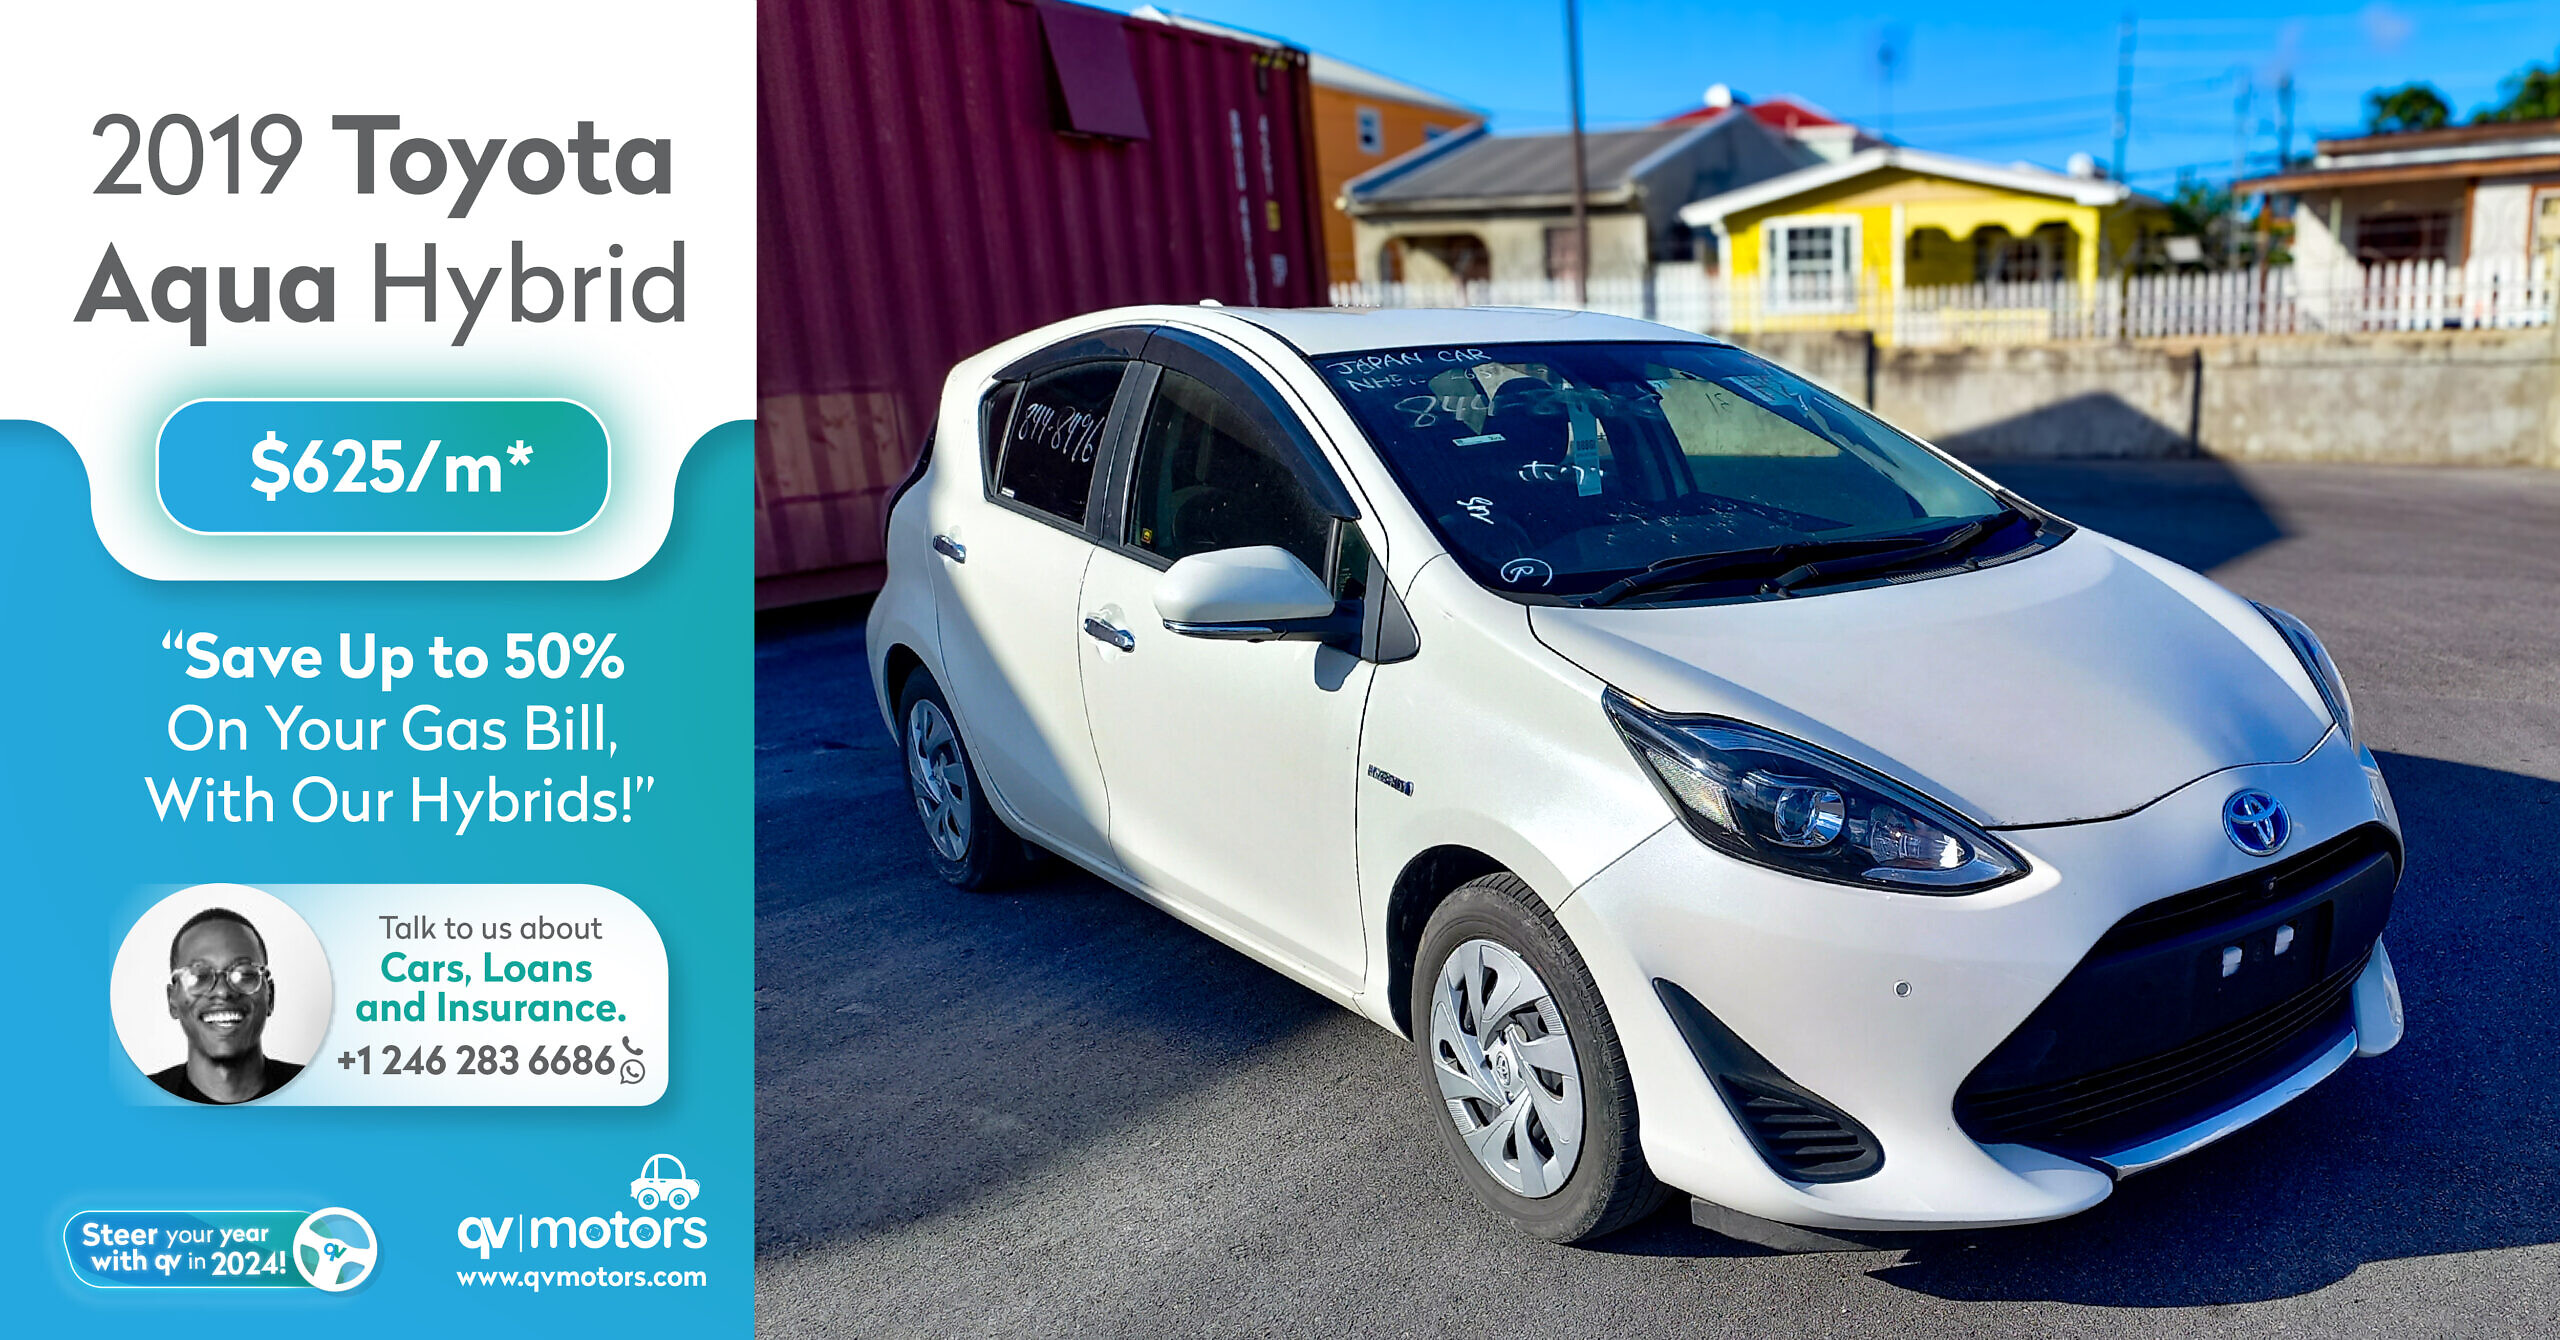 2019 Toyota Aqua Hybrid – Save up to 50% on gas!